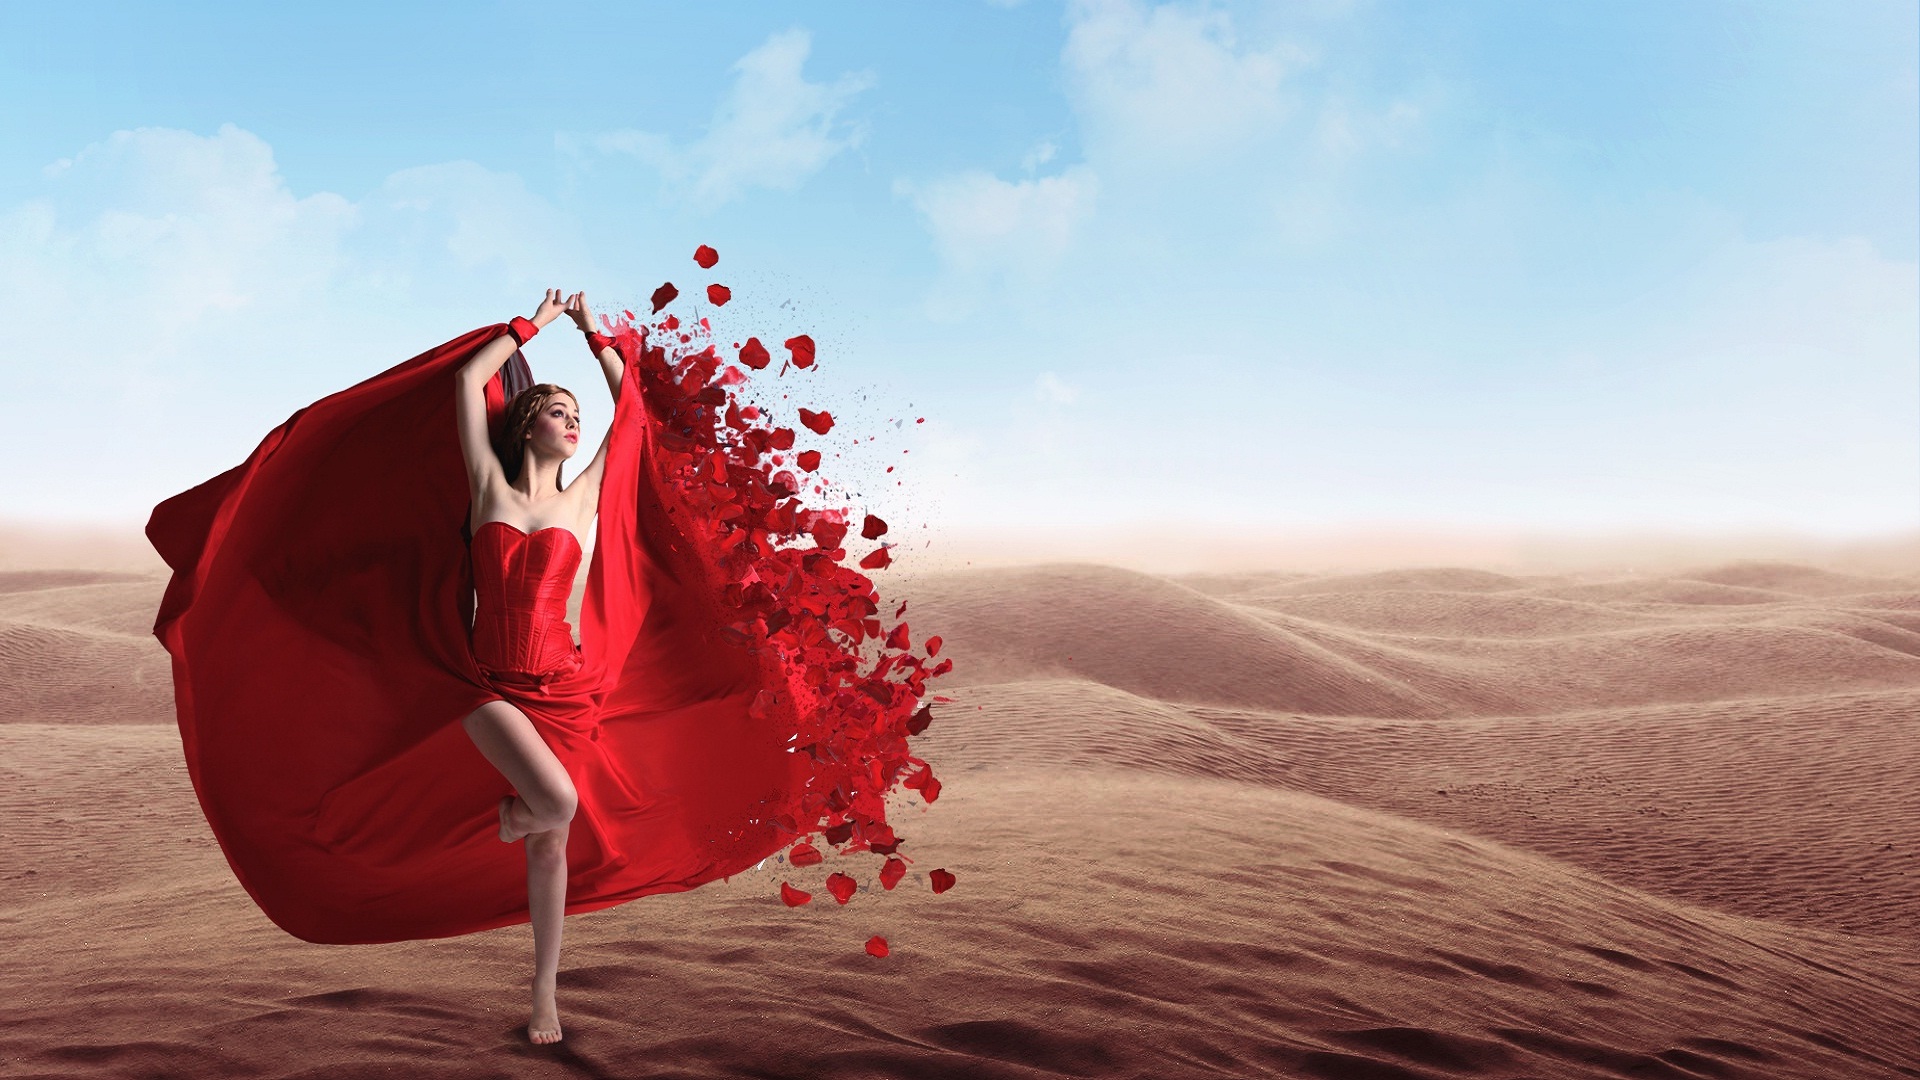 Exquisite-happy-girl-in-red-dress. | ÇÖL & ARABİC | Pinterest ...